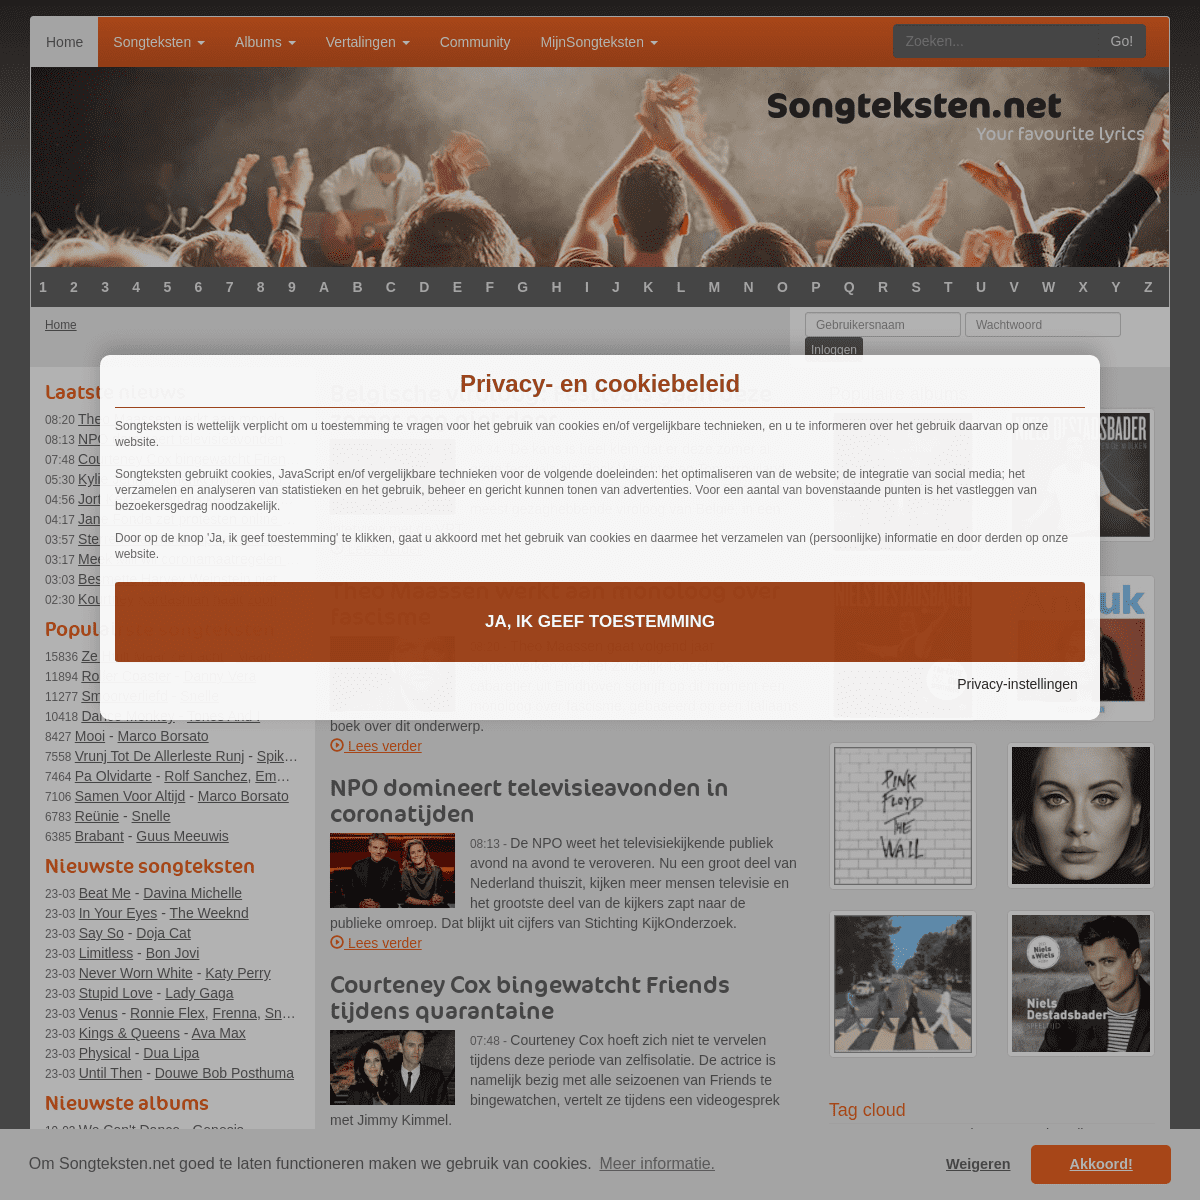 A complete backup of songteksten.net